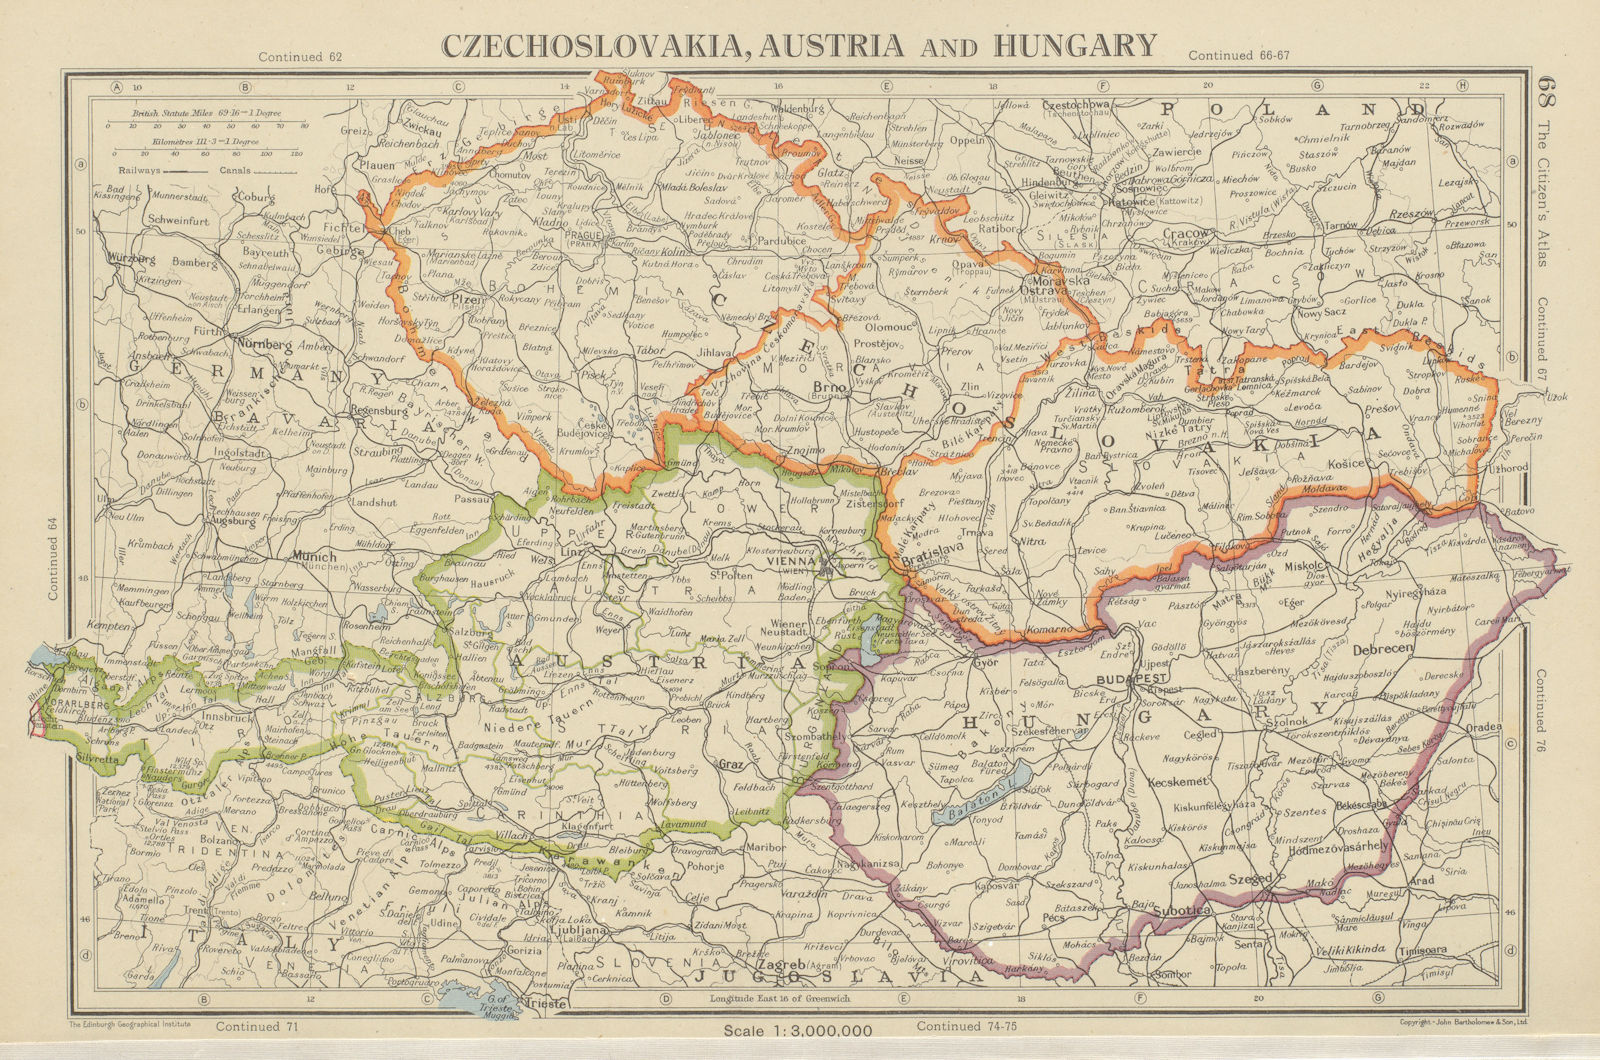 Associate Product CZECHOSLOVAKIA, AUSTRIA & HUNGARY. Central Europe post WW2 borders 1947 map